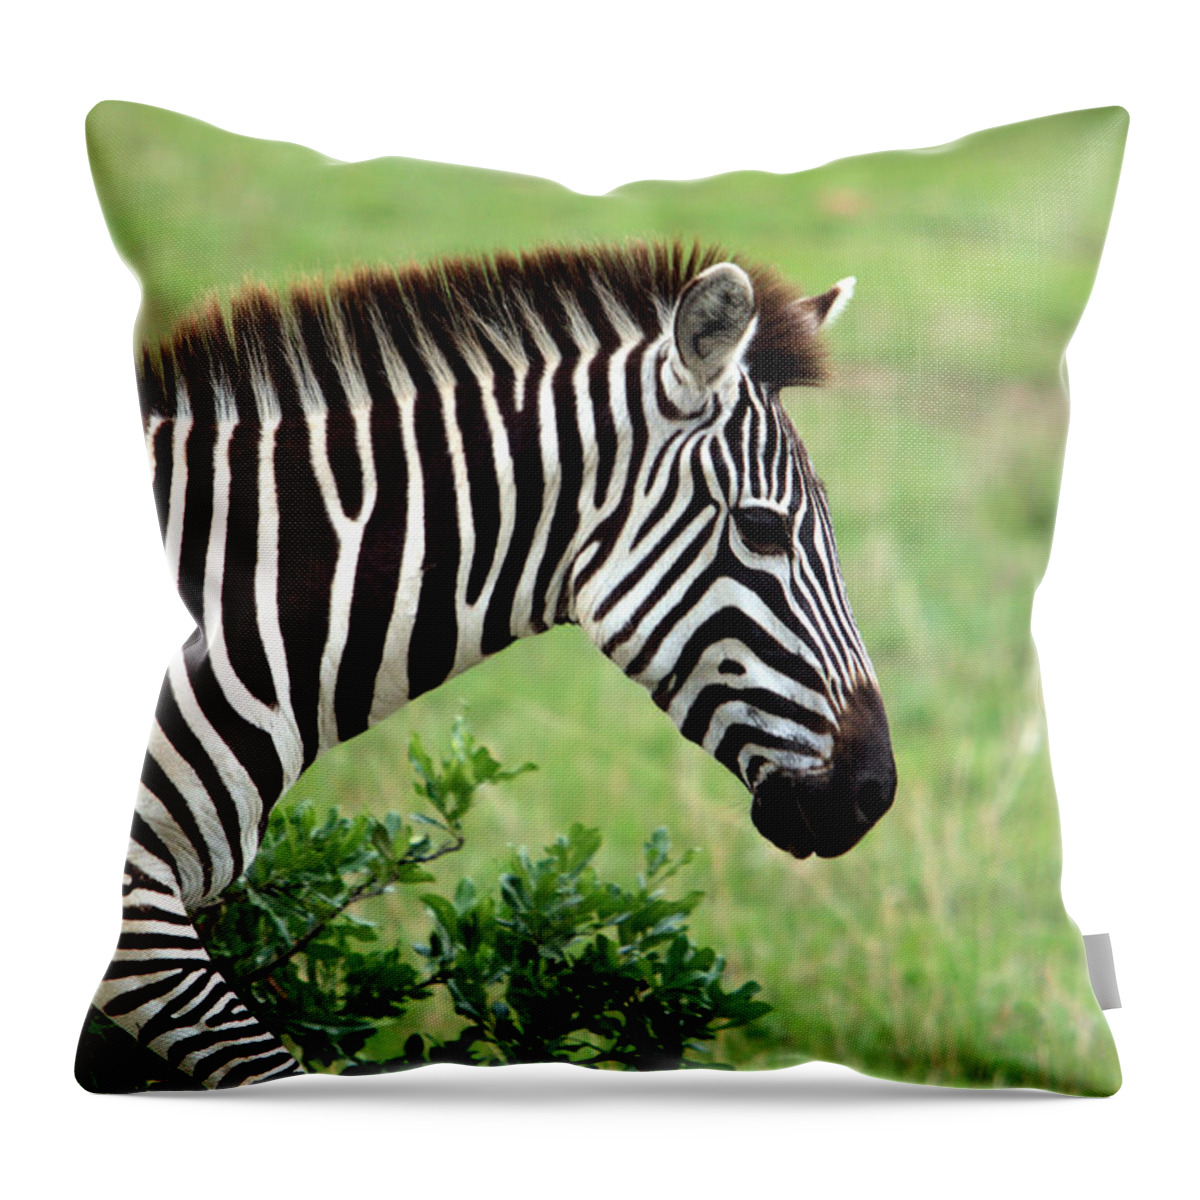 Zebra Throw Pillow featuring the photograph Zebra by Aidan Moran